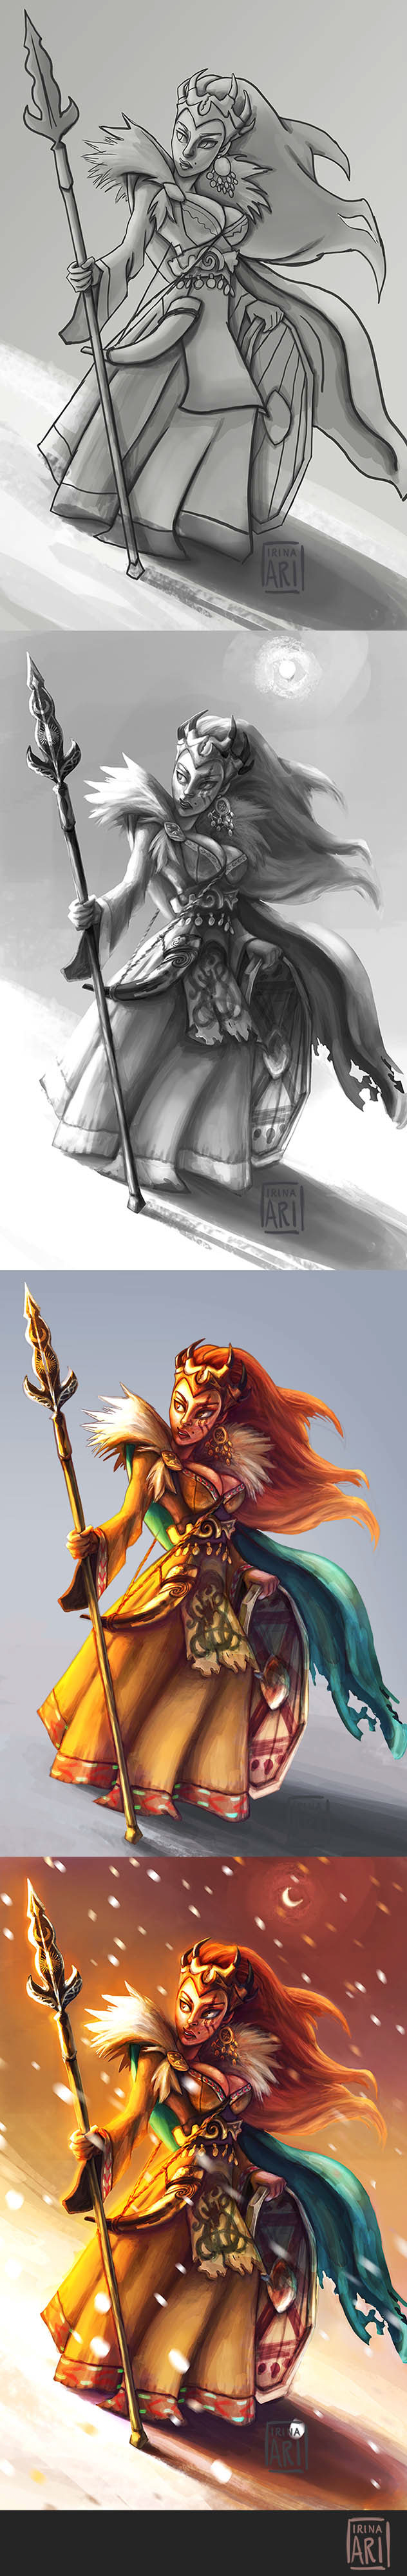 viking queen vikingqueen Femalewarrior warrior fantasy orange red female woman